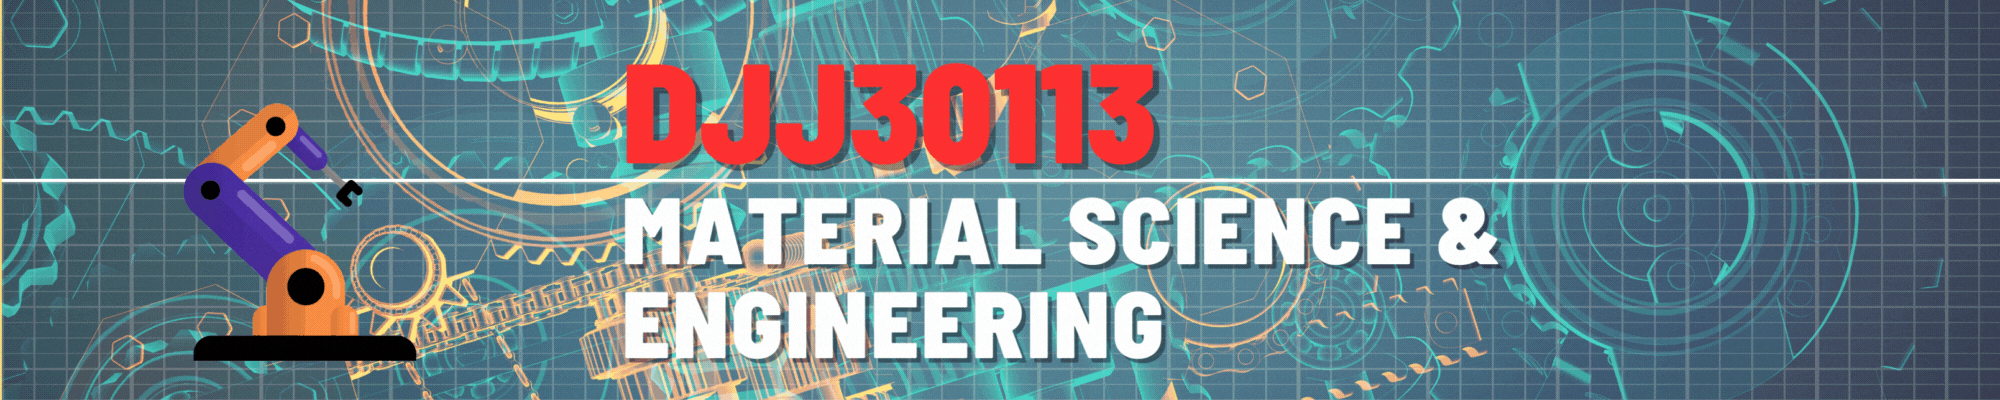 DJJ30113 MATERIAL SCIENCE &amp; ENGINEERING